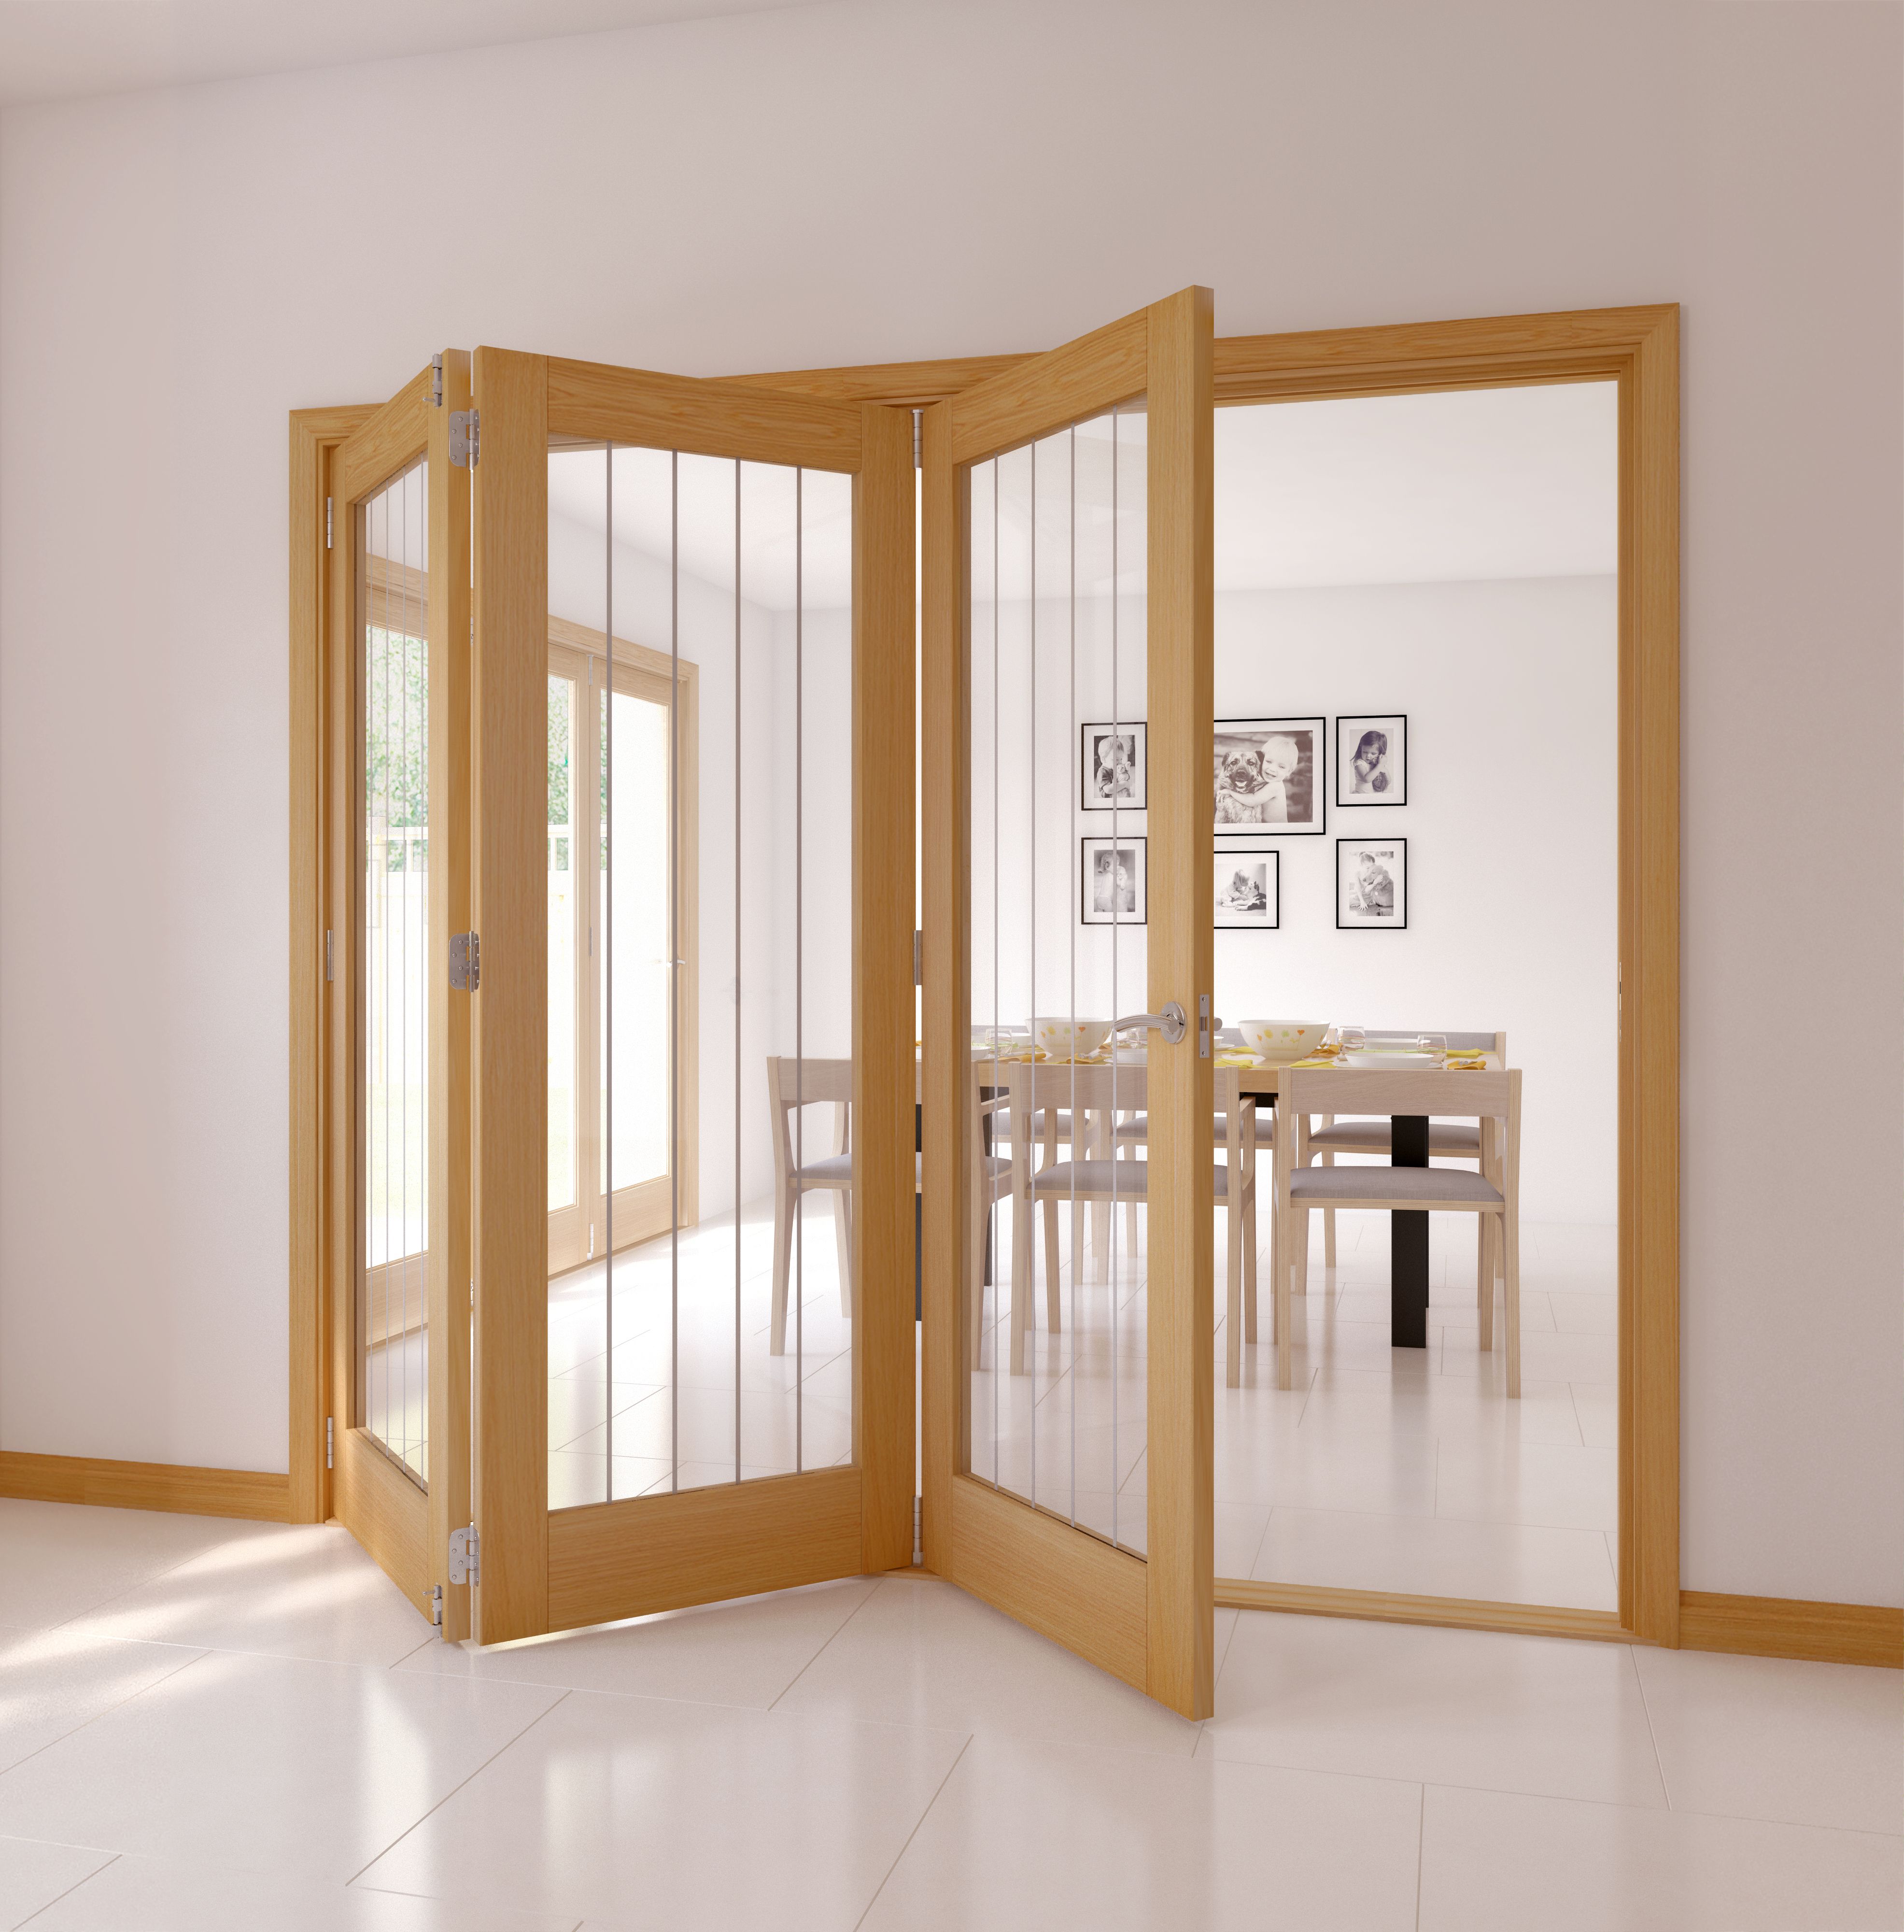 1 Lite Glazed Cottage Oak Veneer Lh Internal Tri Fold Door Set H 2035mm W 2374mm Departments Diy At B Q